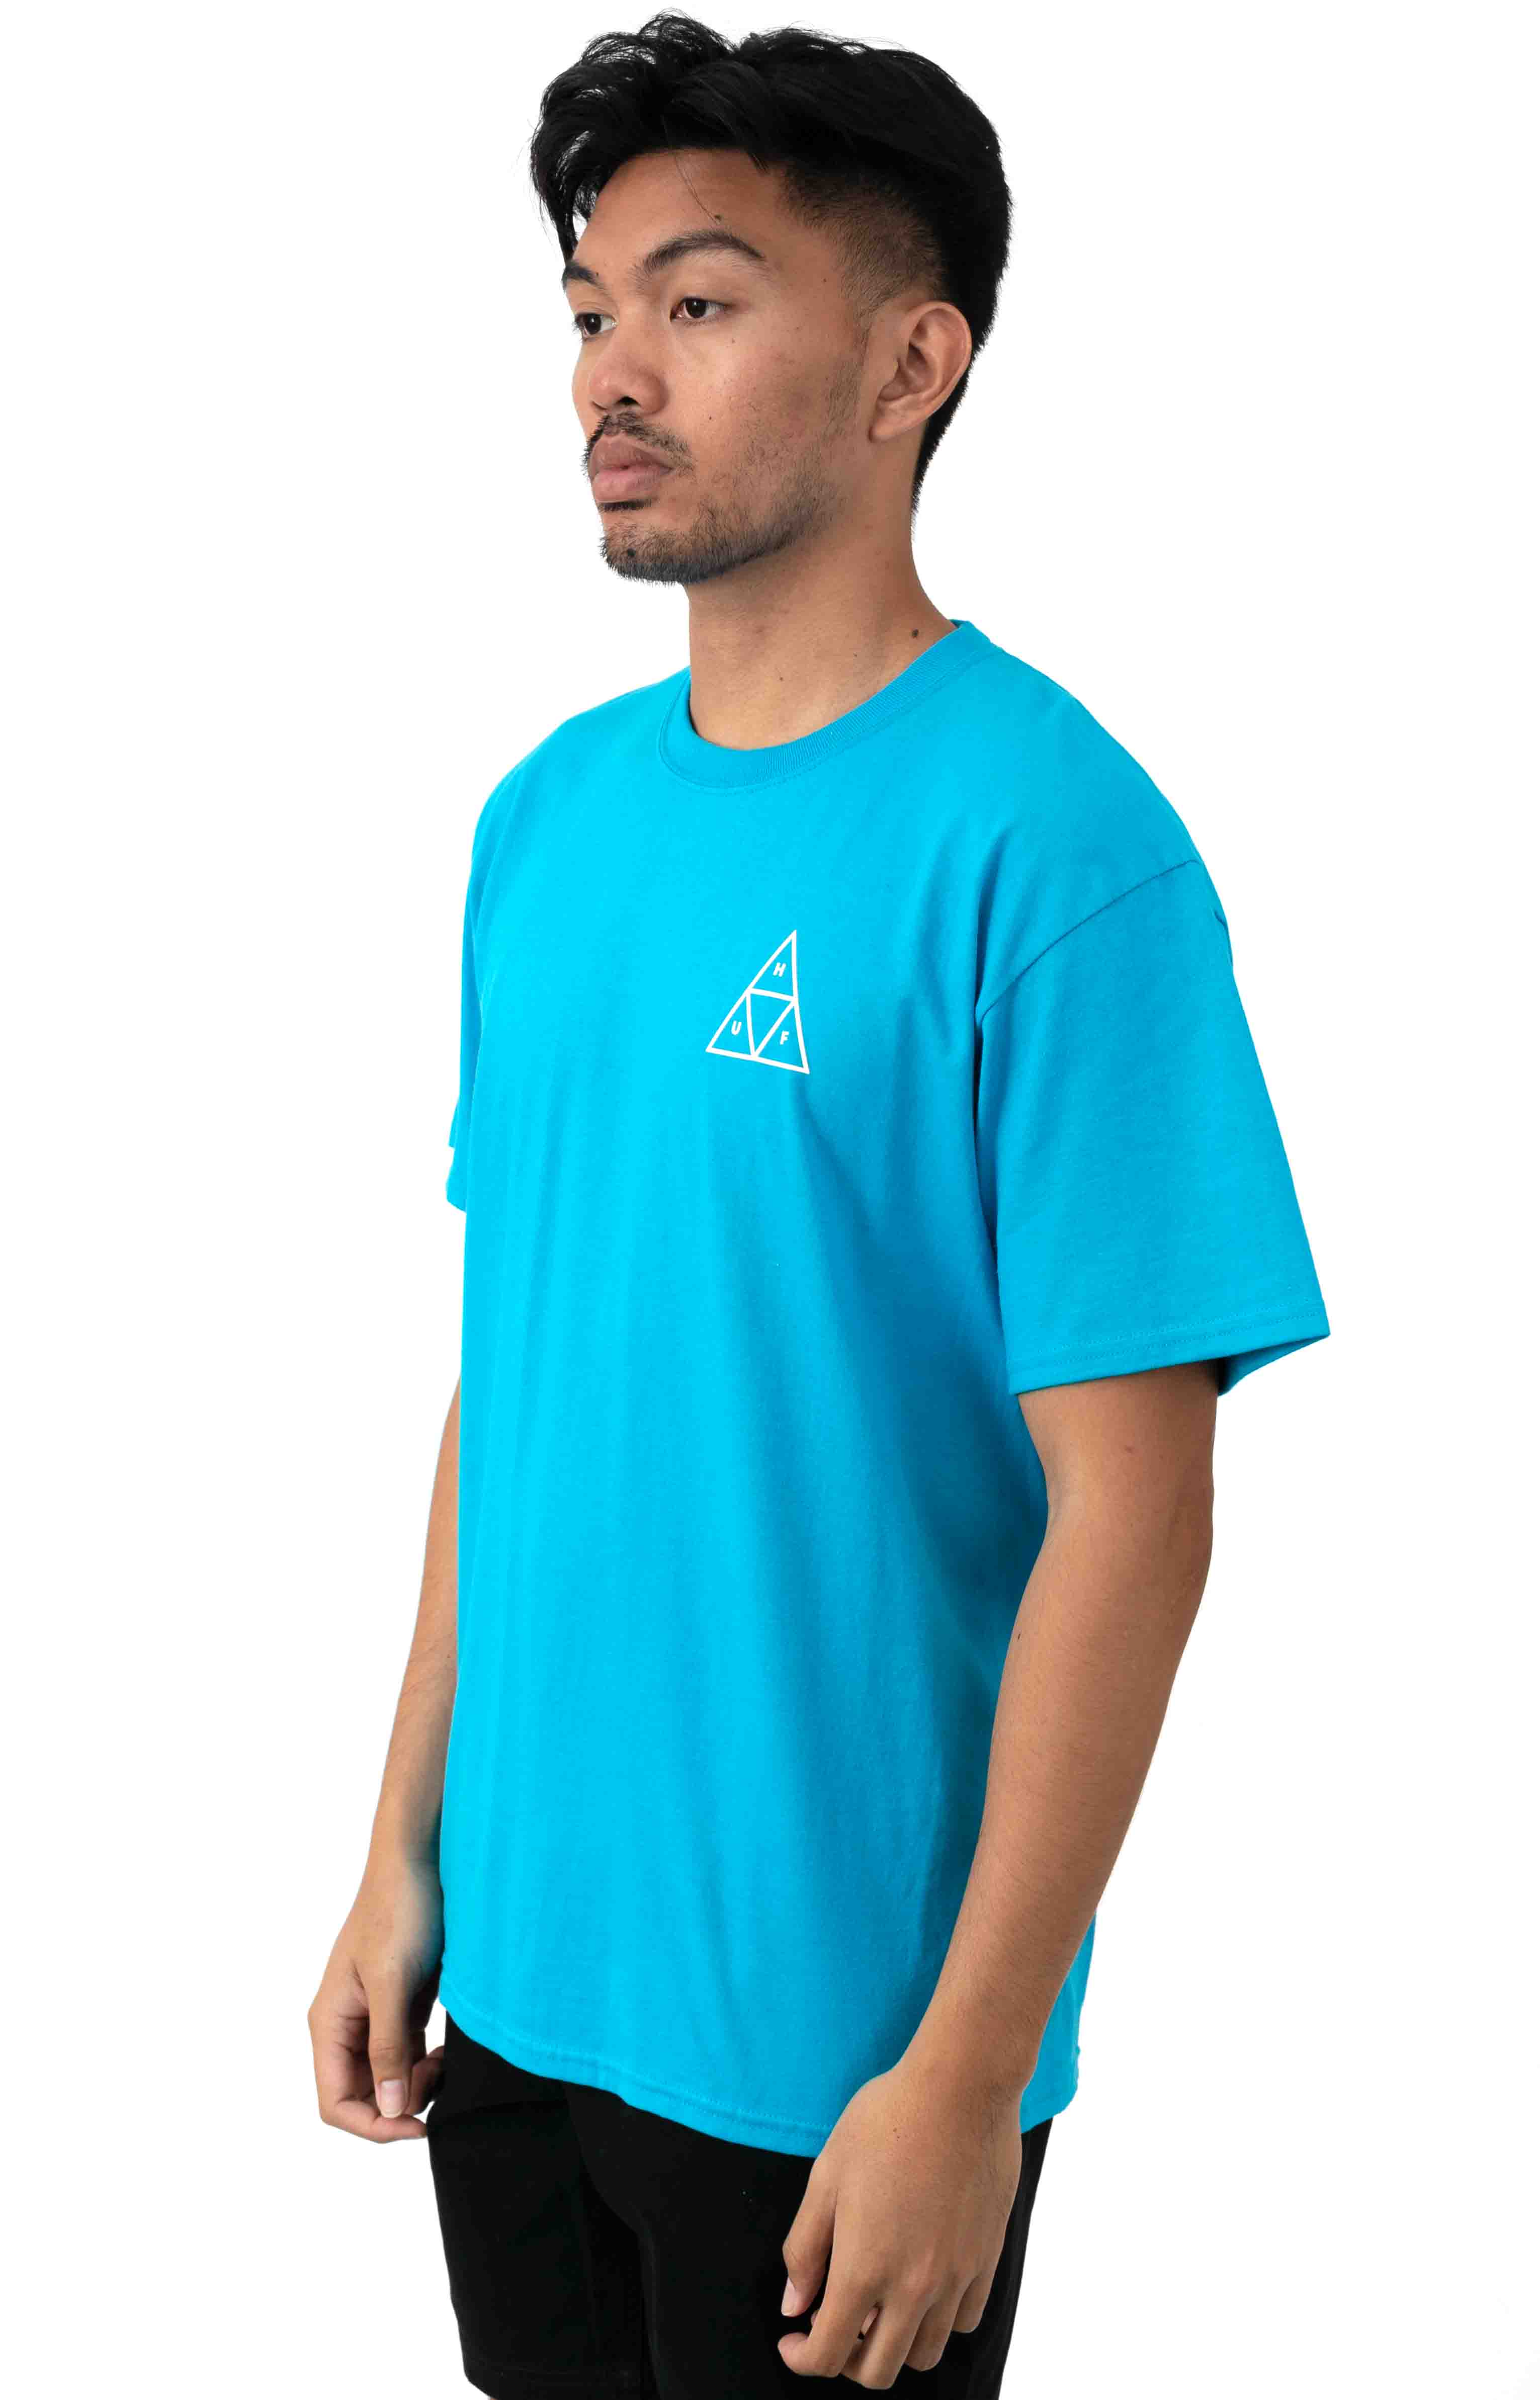 Mirage TT T-Shirt - Turquoise